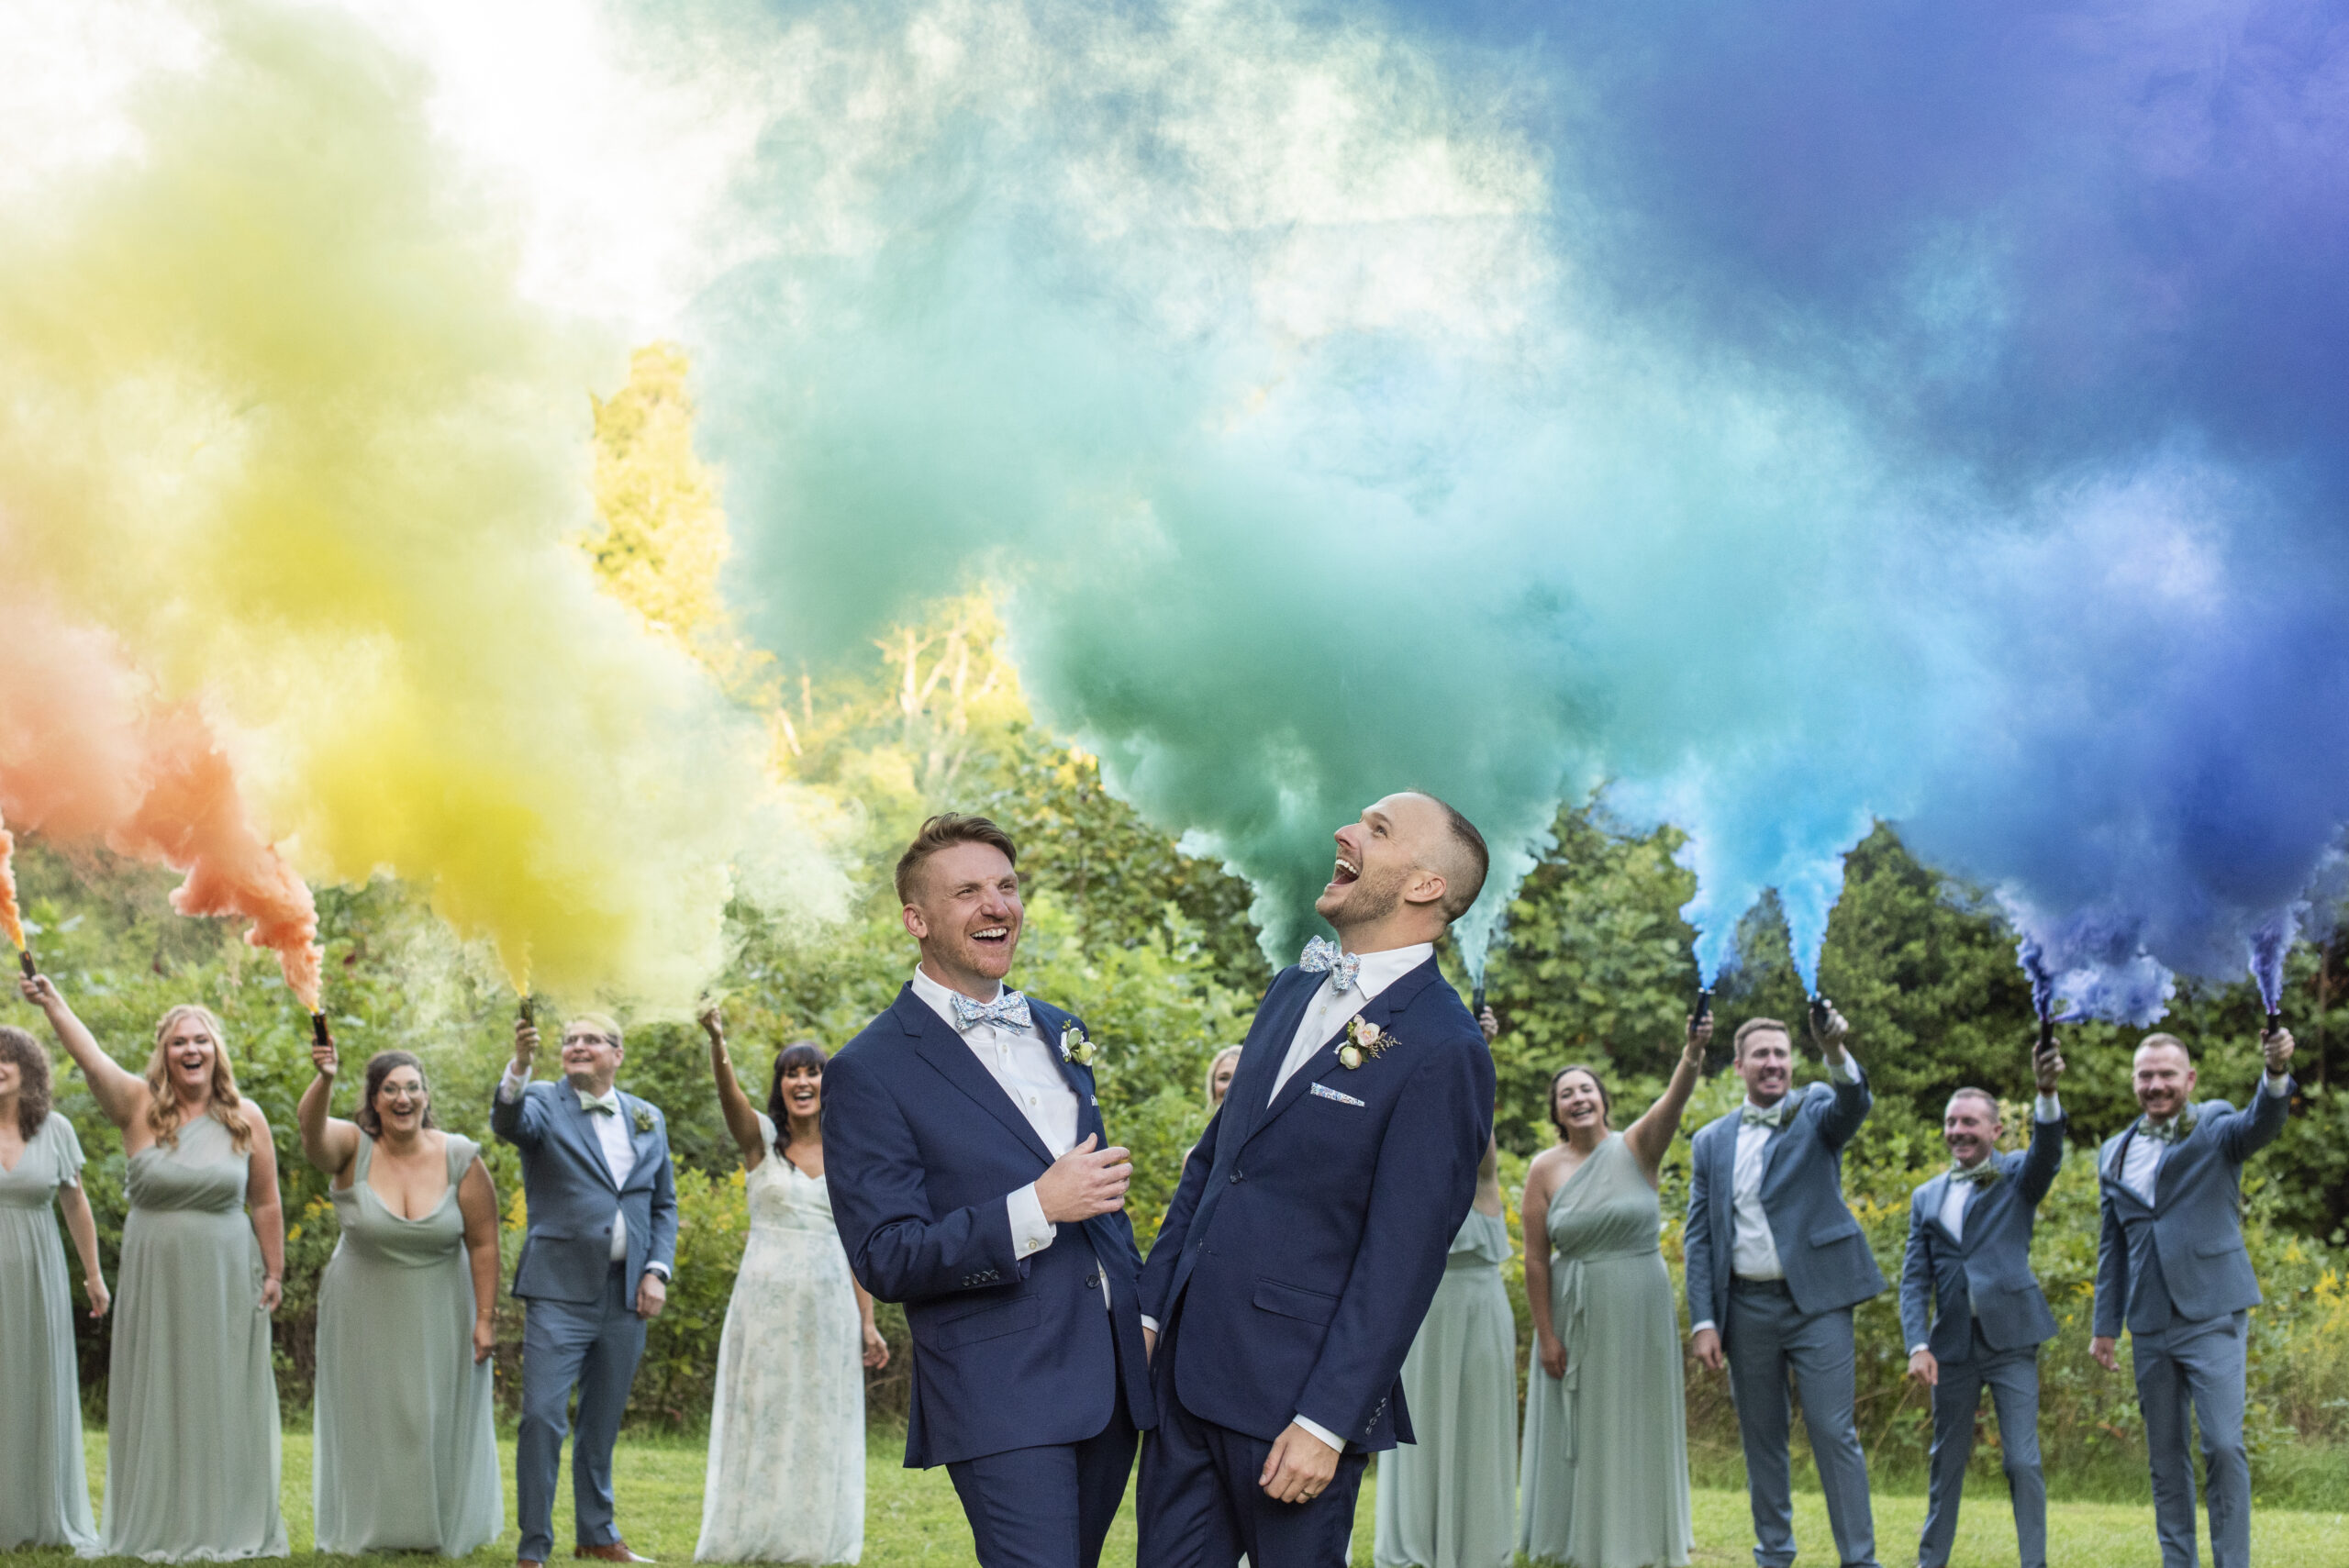 Twisty Maple Wedding Photography of gay couple under rainbow smoke bomb in Asheville, NC